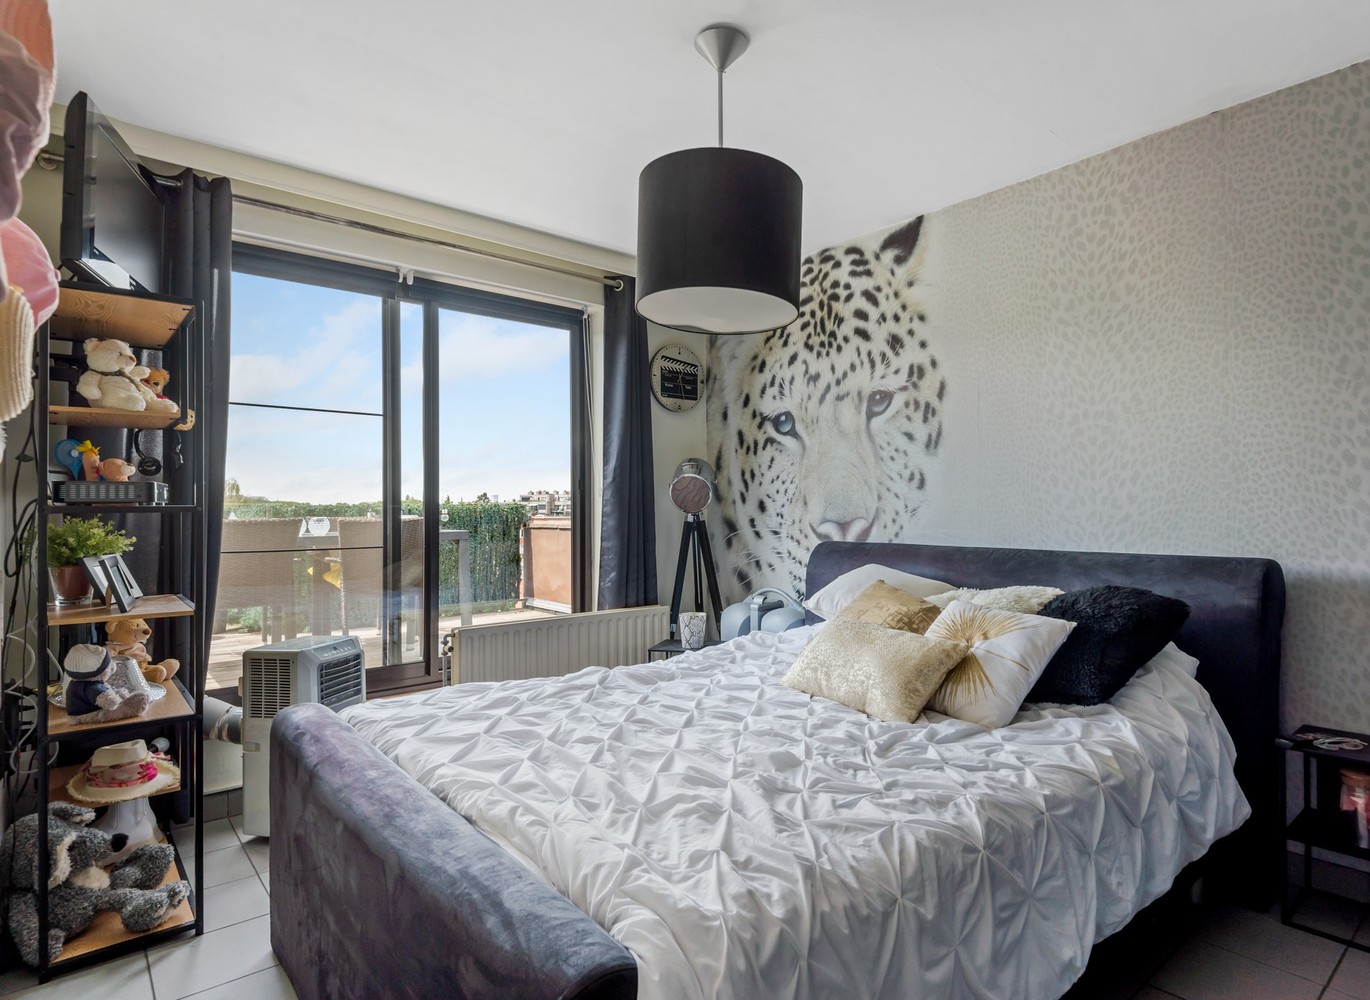 Mooi dakappartement met 2 slaapkamers en 2 terrassen te koop te Deurne afbeelding 18